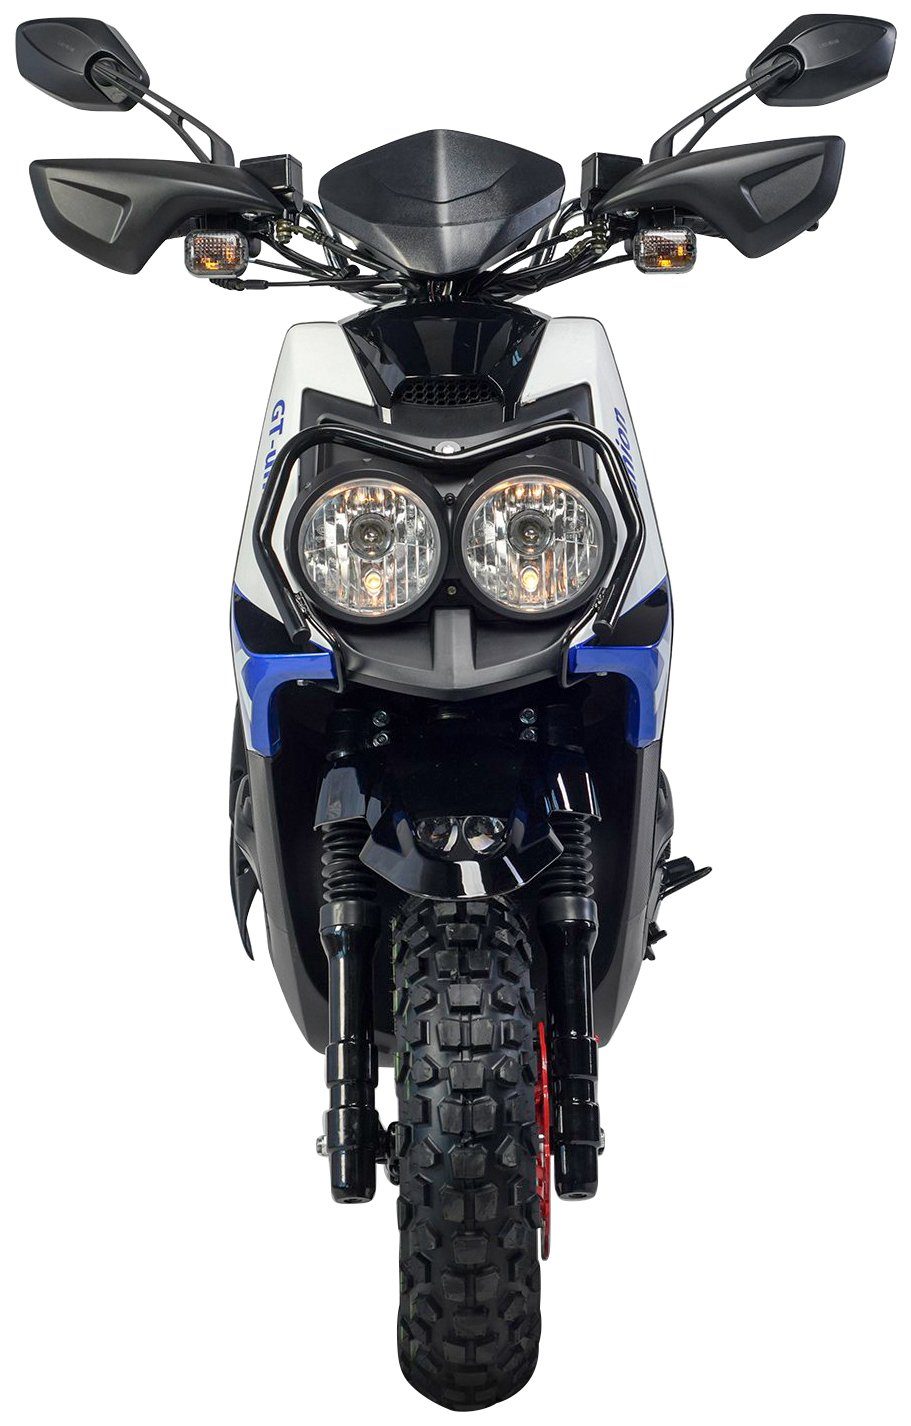 GT UNION 125 km/h, weiß/blau/schwarz 55 Euro Motorroller Cross-Concept, PX 85 ccm, 5